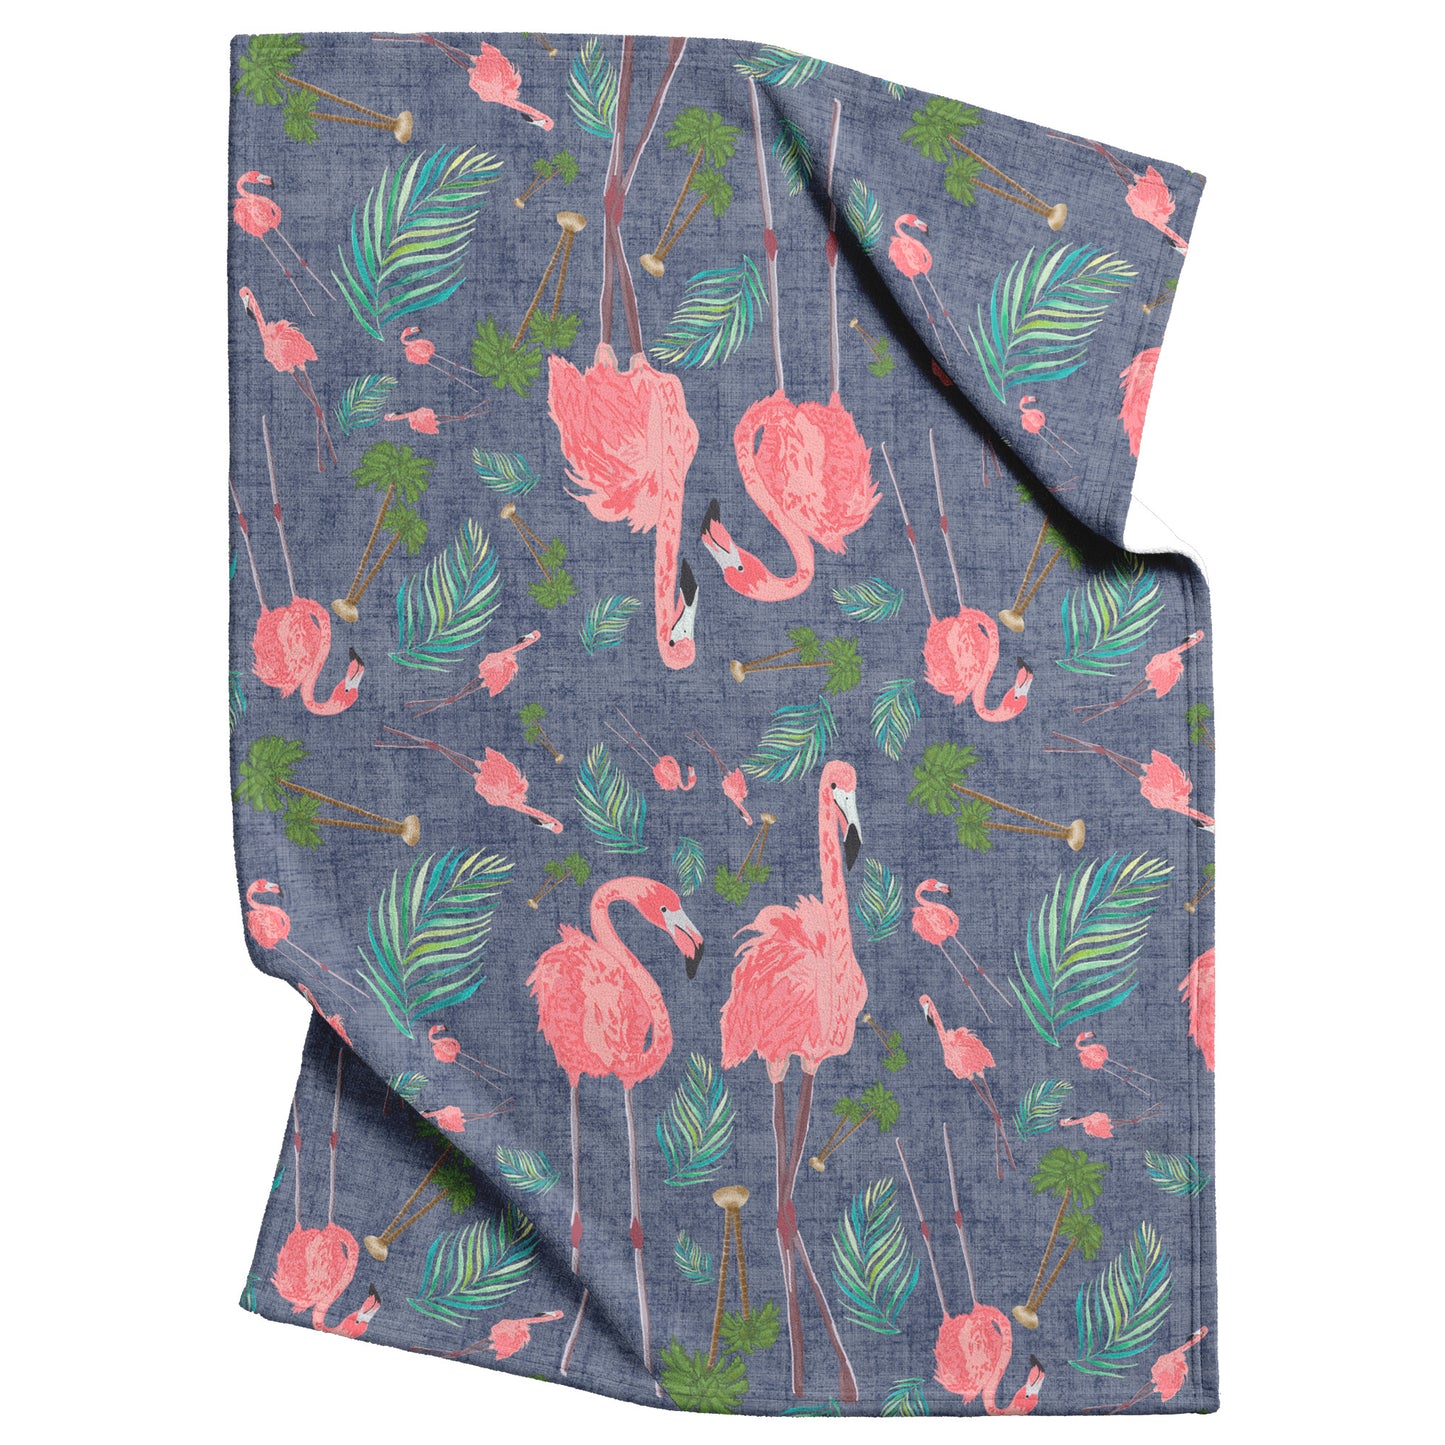 Flamingos on Navy Blue  Linen Textured Background, Fleece Blanket